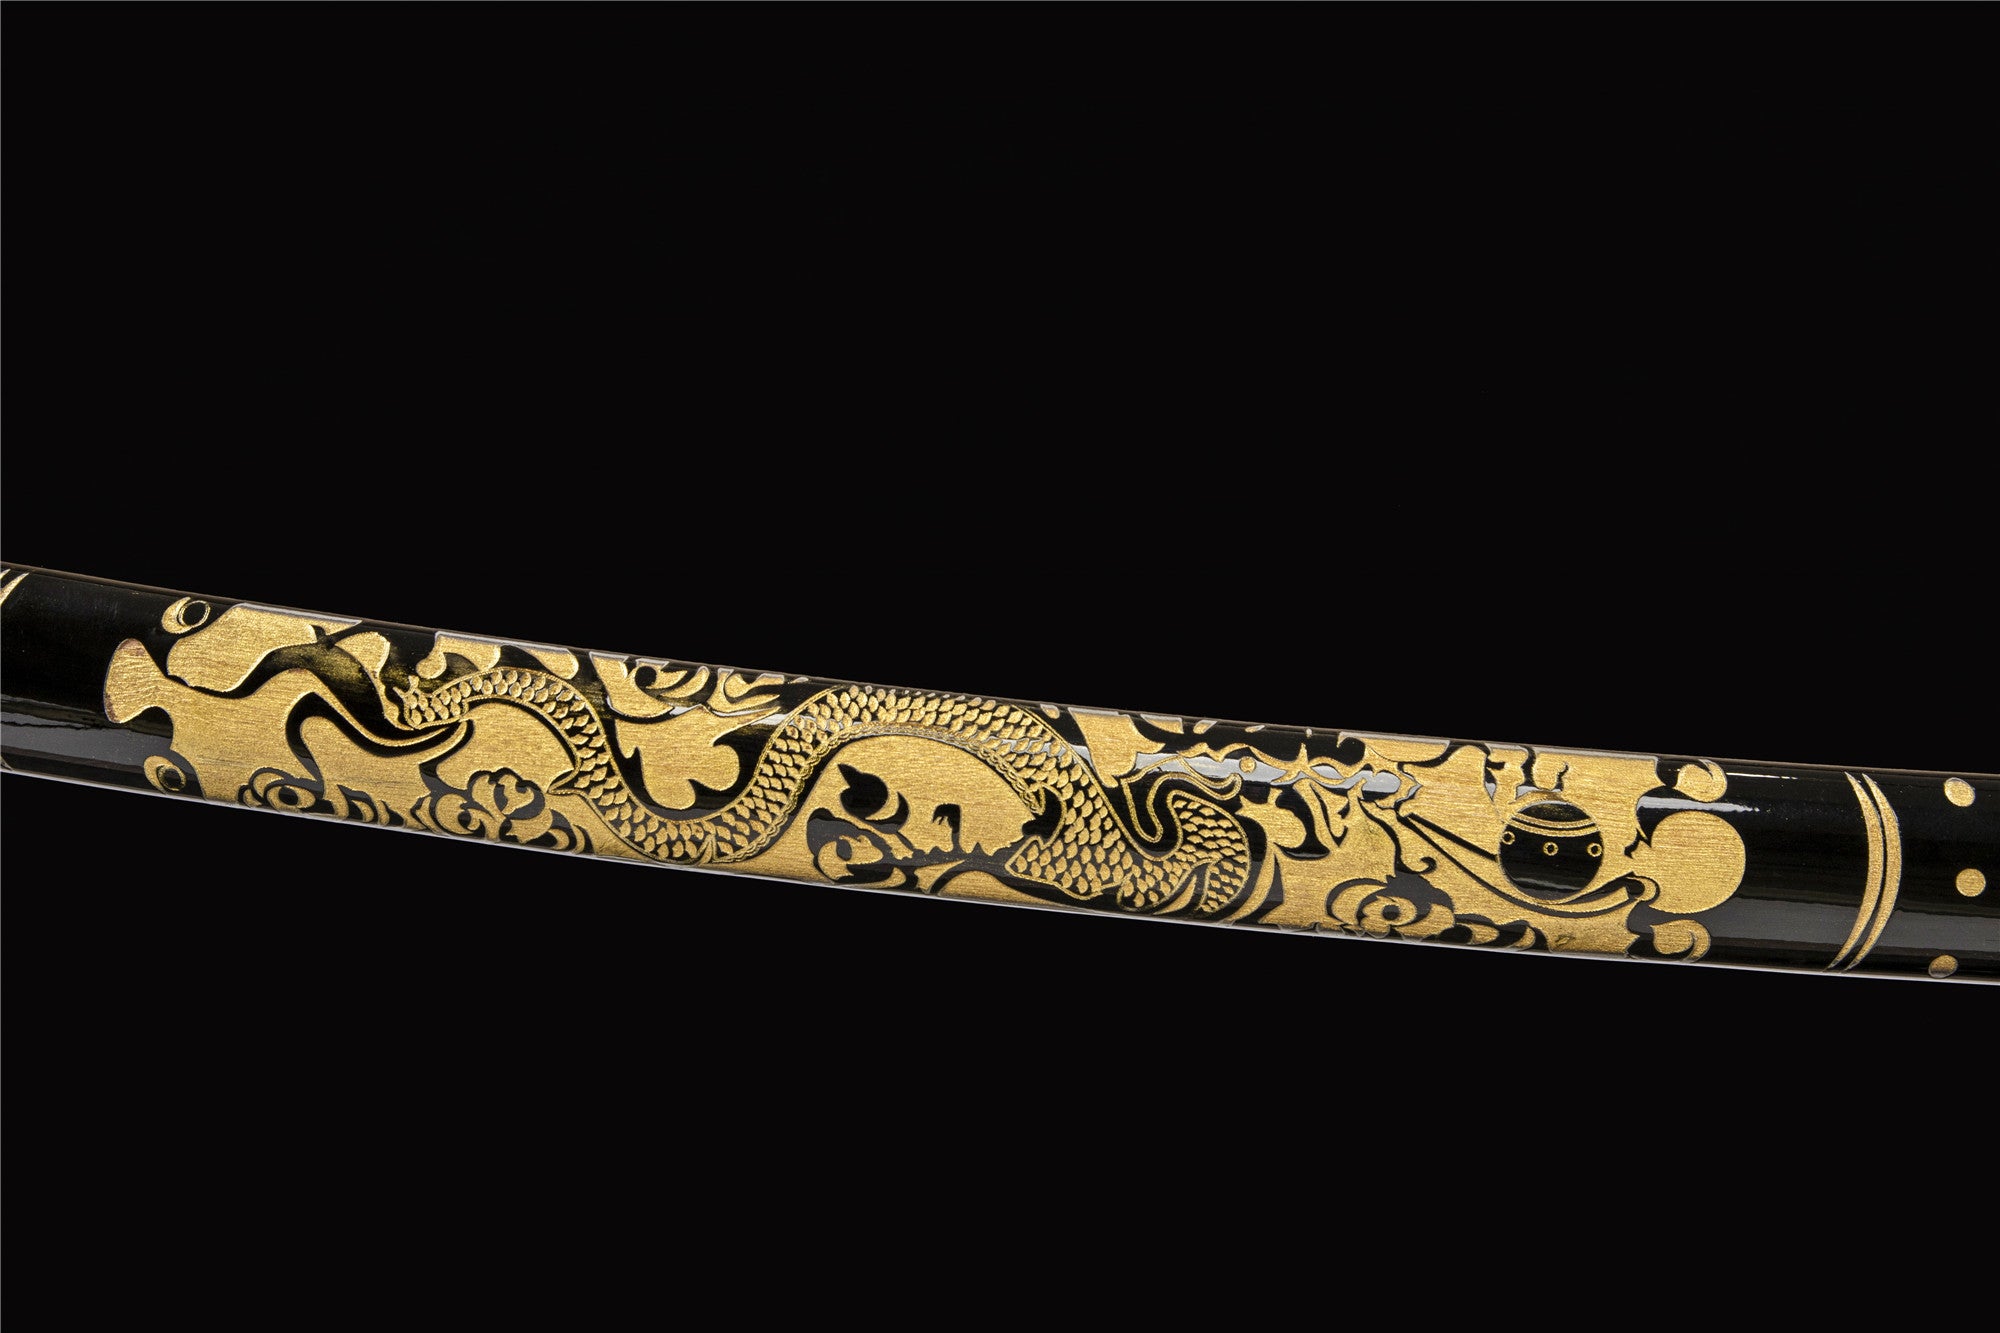 Golden Dragon Katana,Wooden Katana,Japanese Samurai Sword,Handmade Wooden Sword,Bamboo Blade